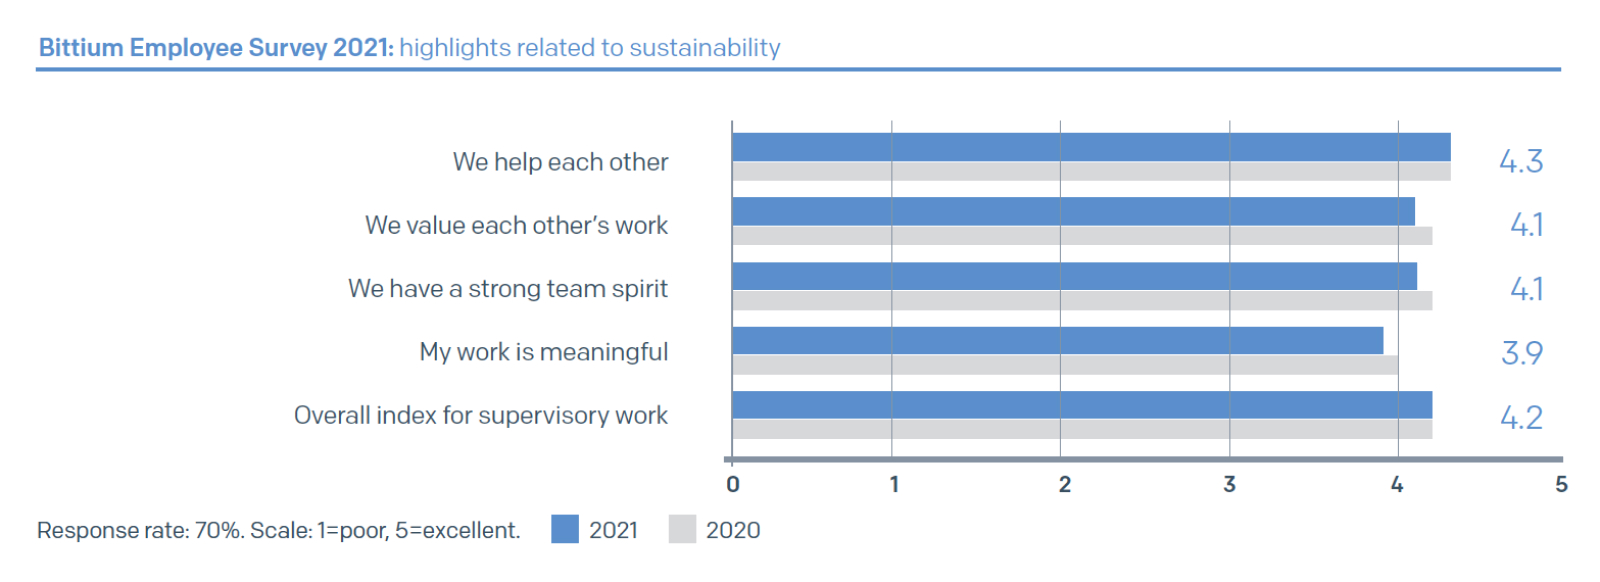 Bittium Employee Survey 2021: highlights related to sustainability